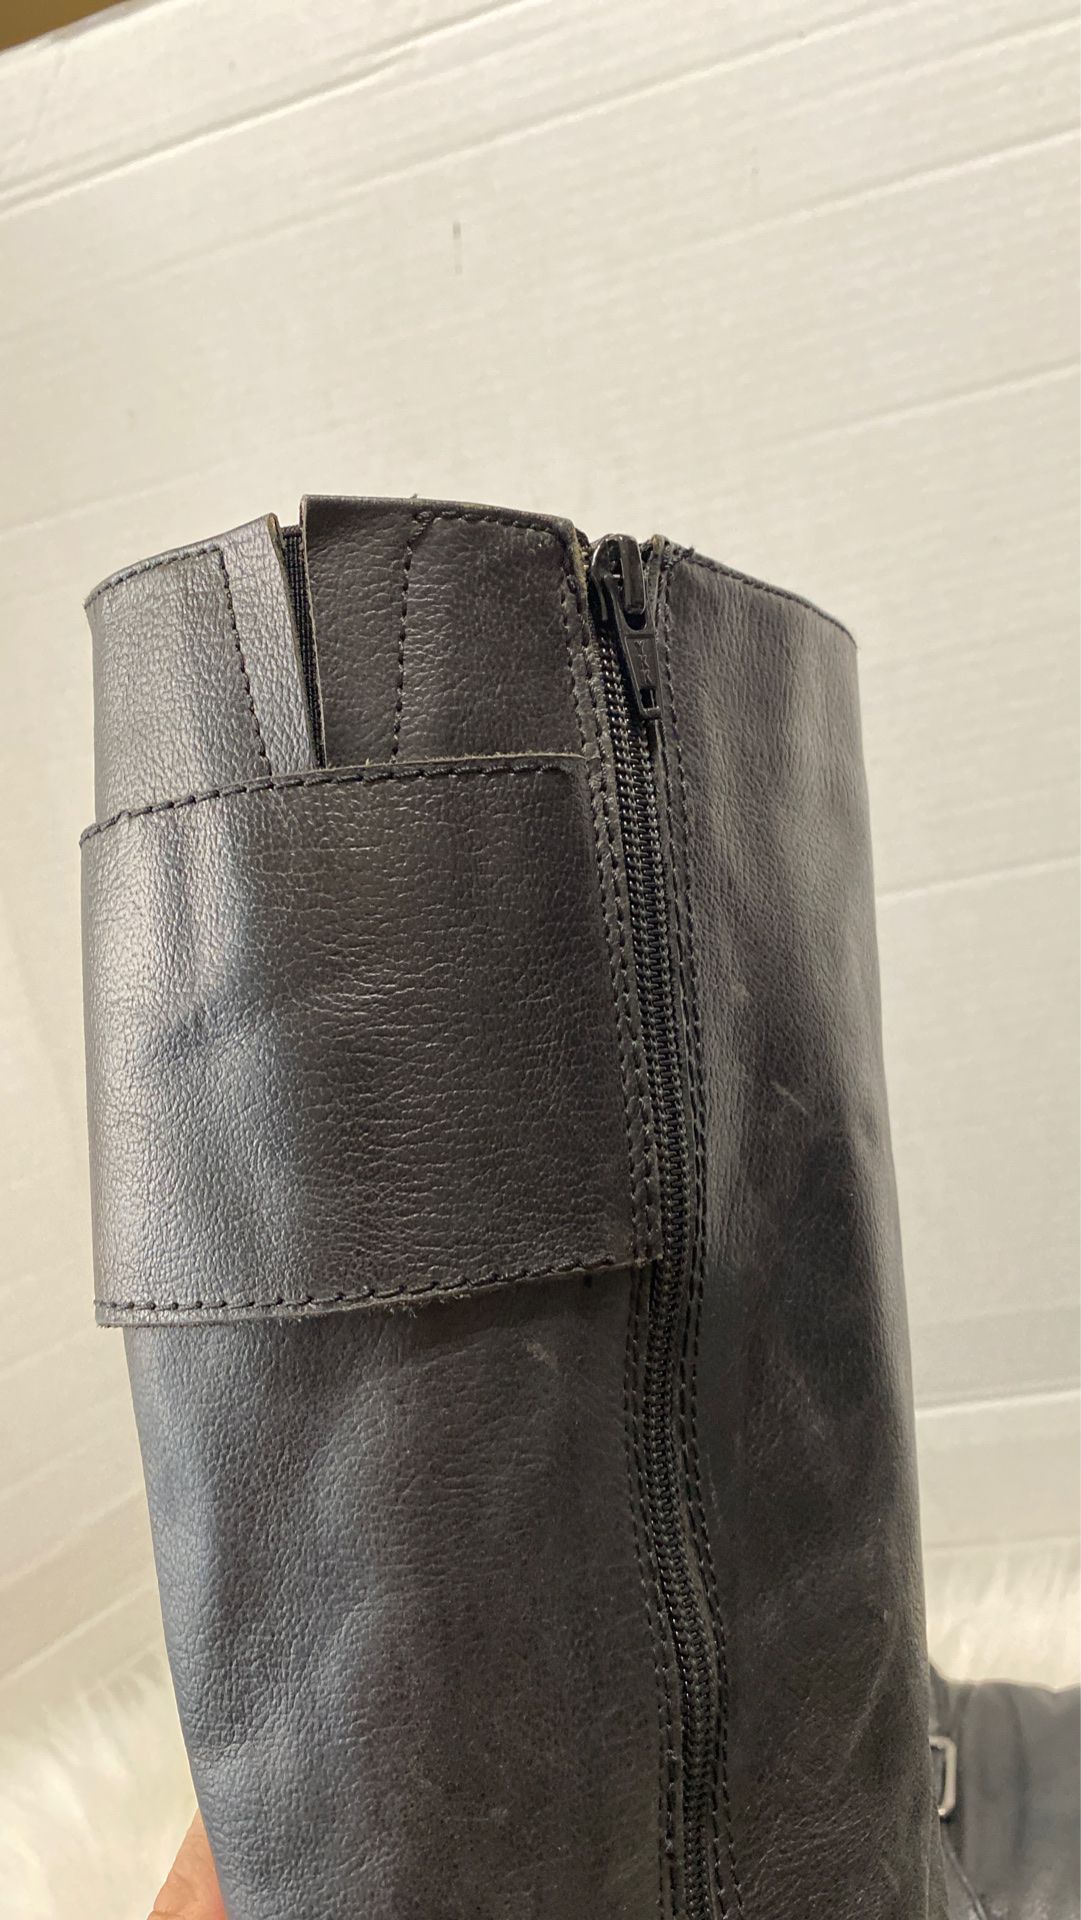 ALDO Black Leather Zip Knee High Riding Boots Size 39 EU 8.5 -9US